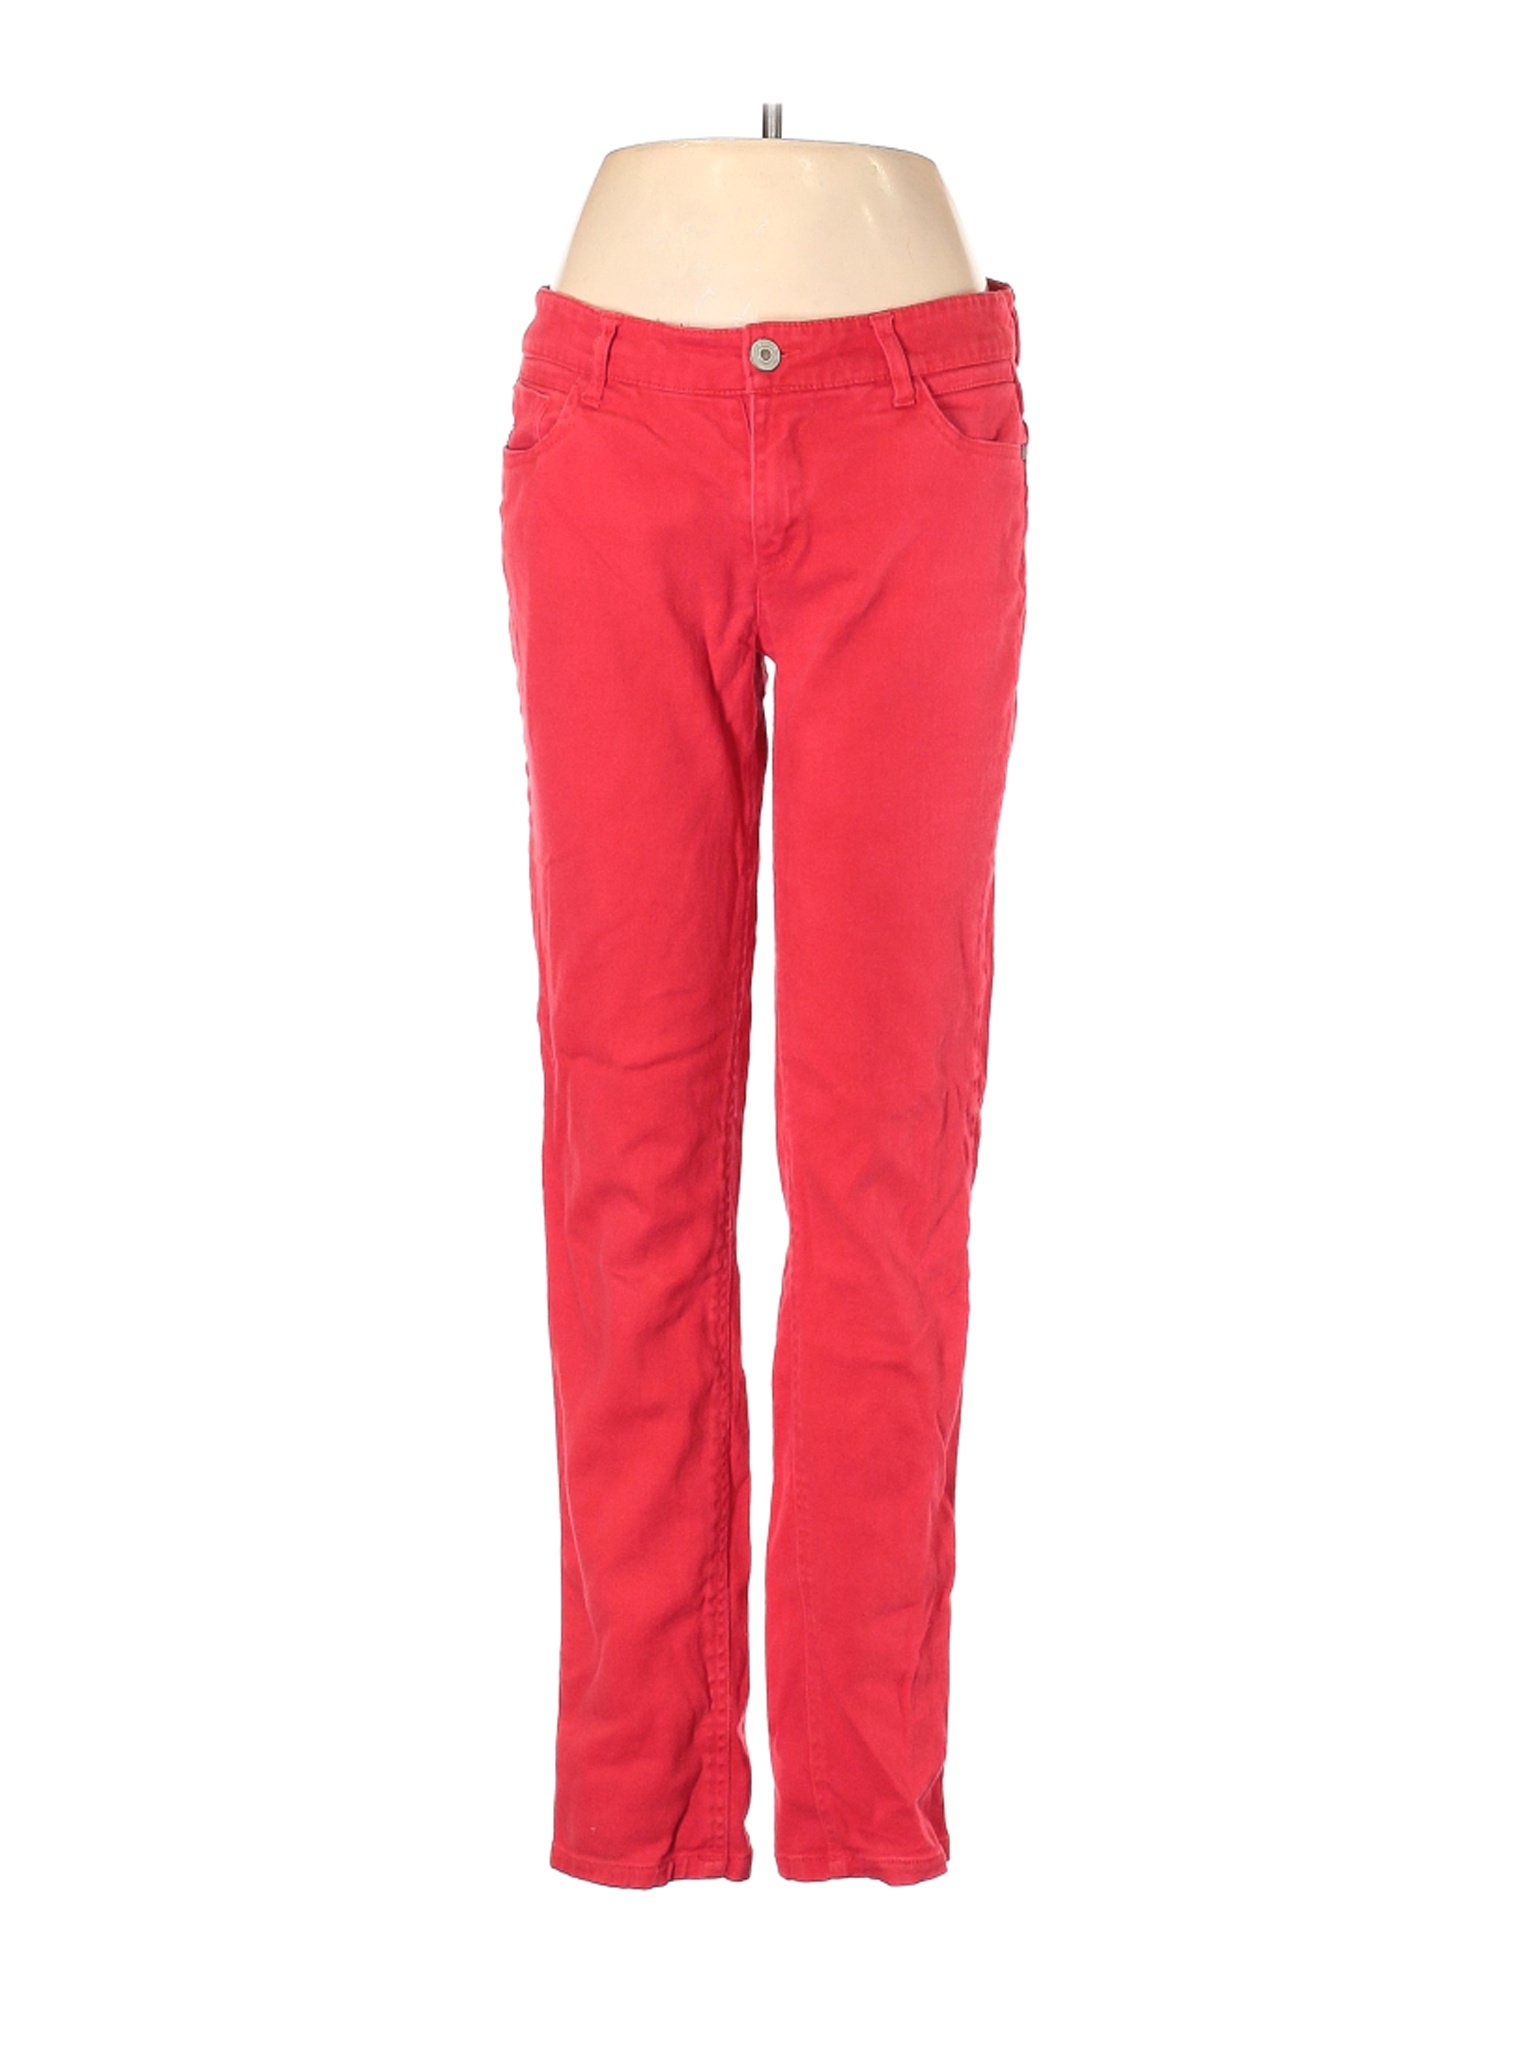 Canyon River Blues Women Red Jeans 8 | eBay